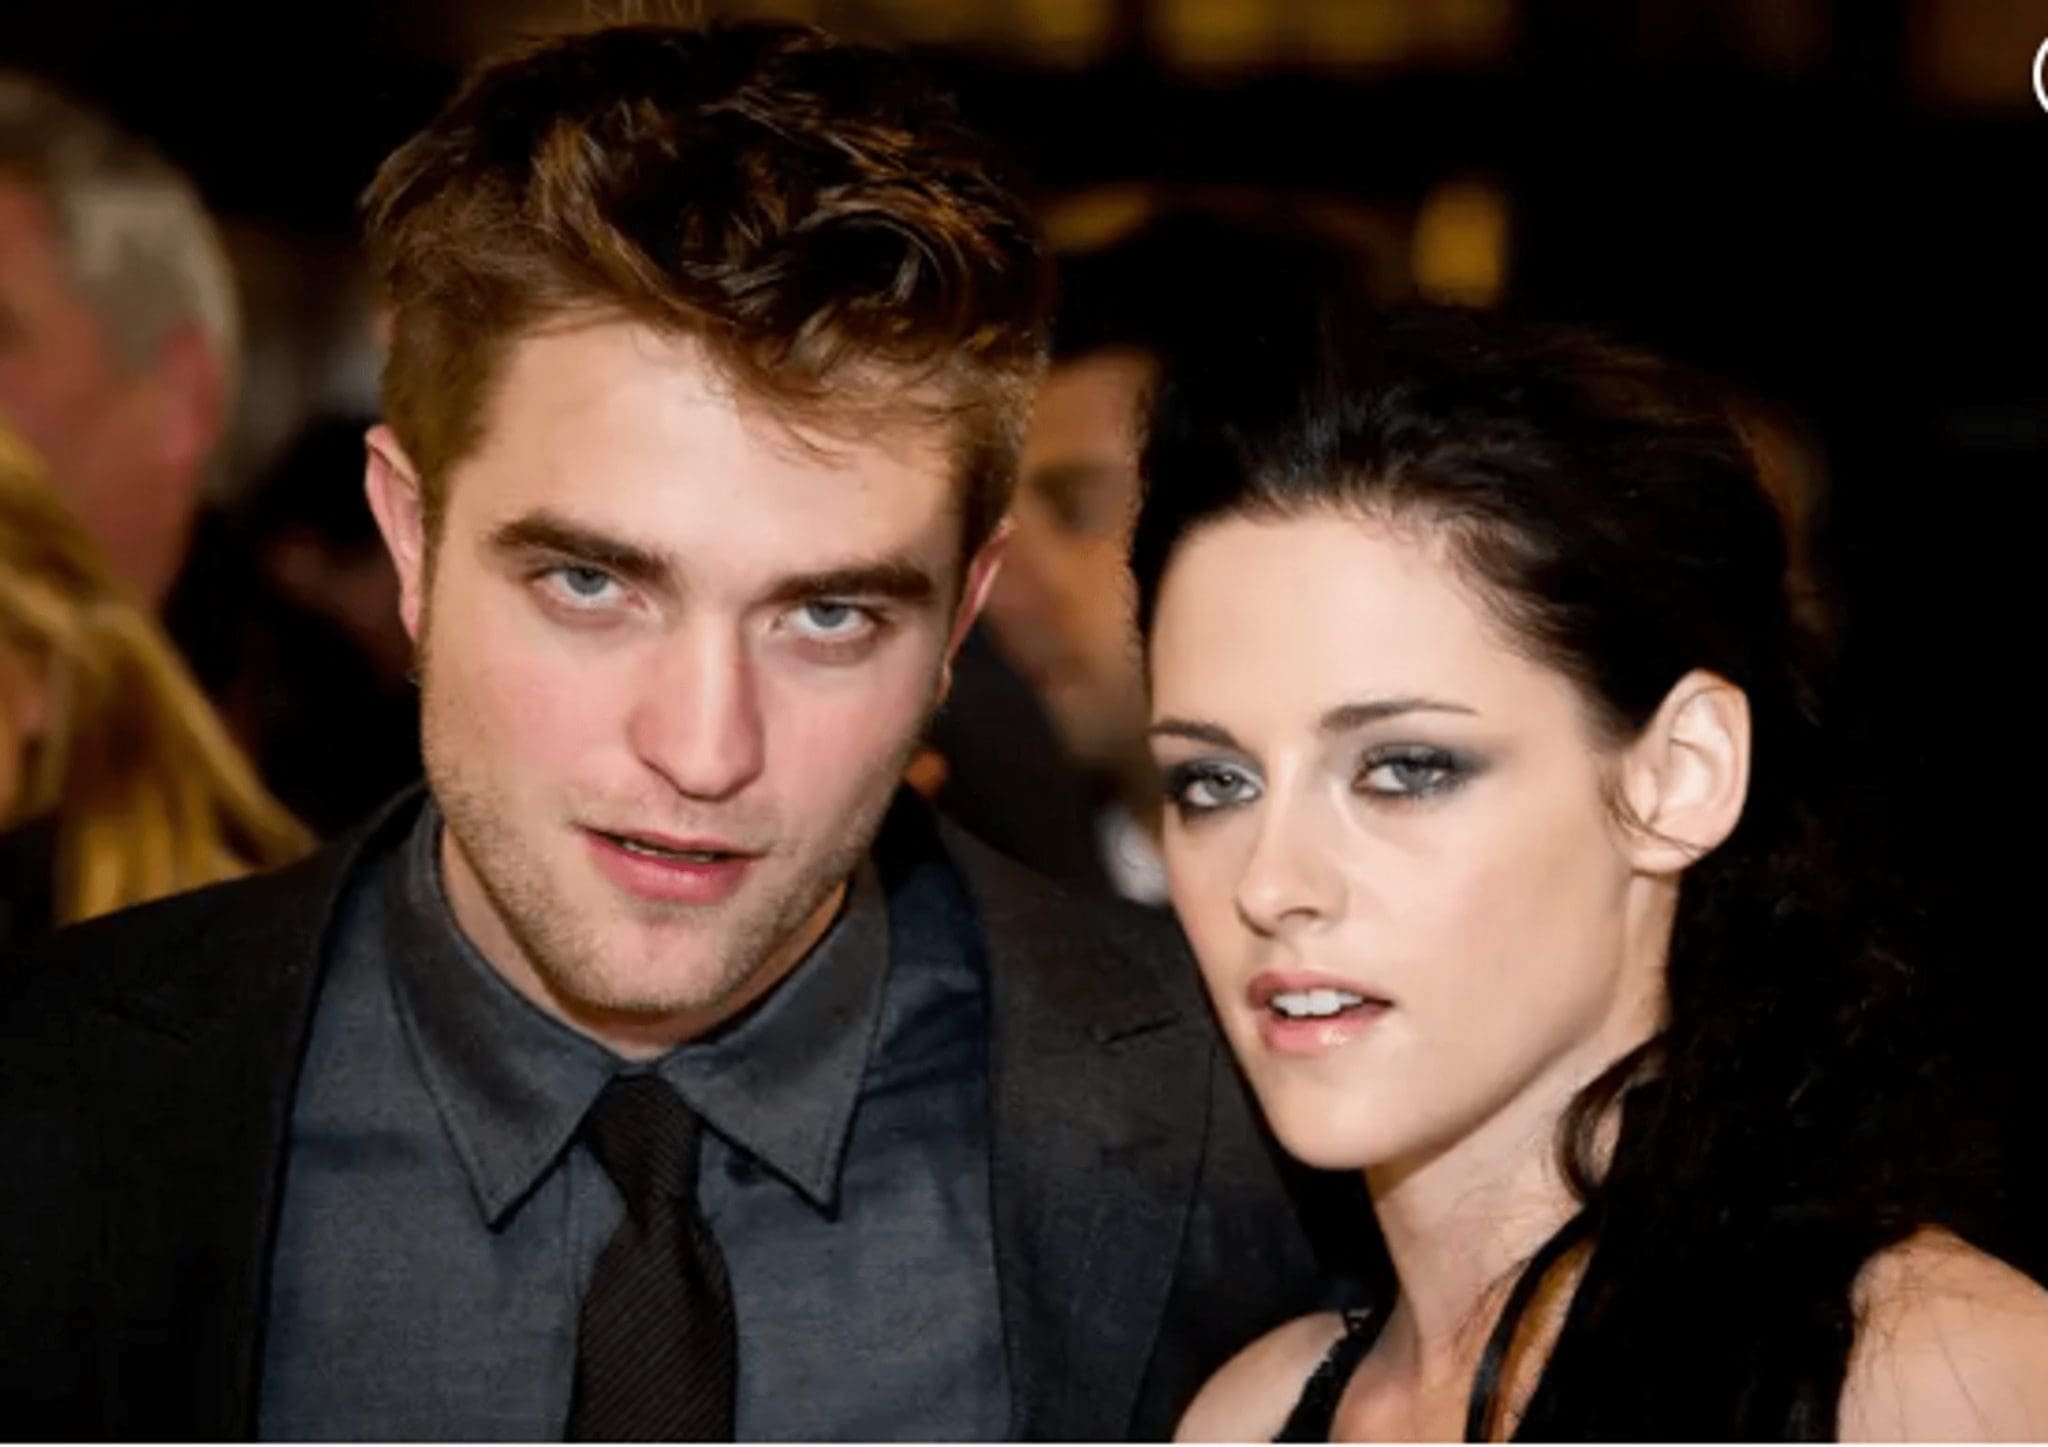 Robert Pattinson and Kristen Stewart may reunite thanks to acclaimed director